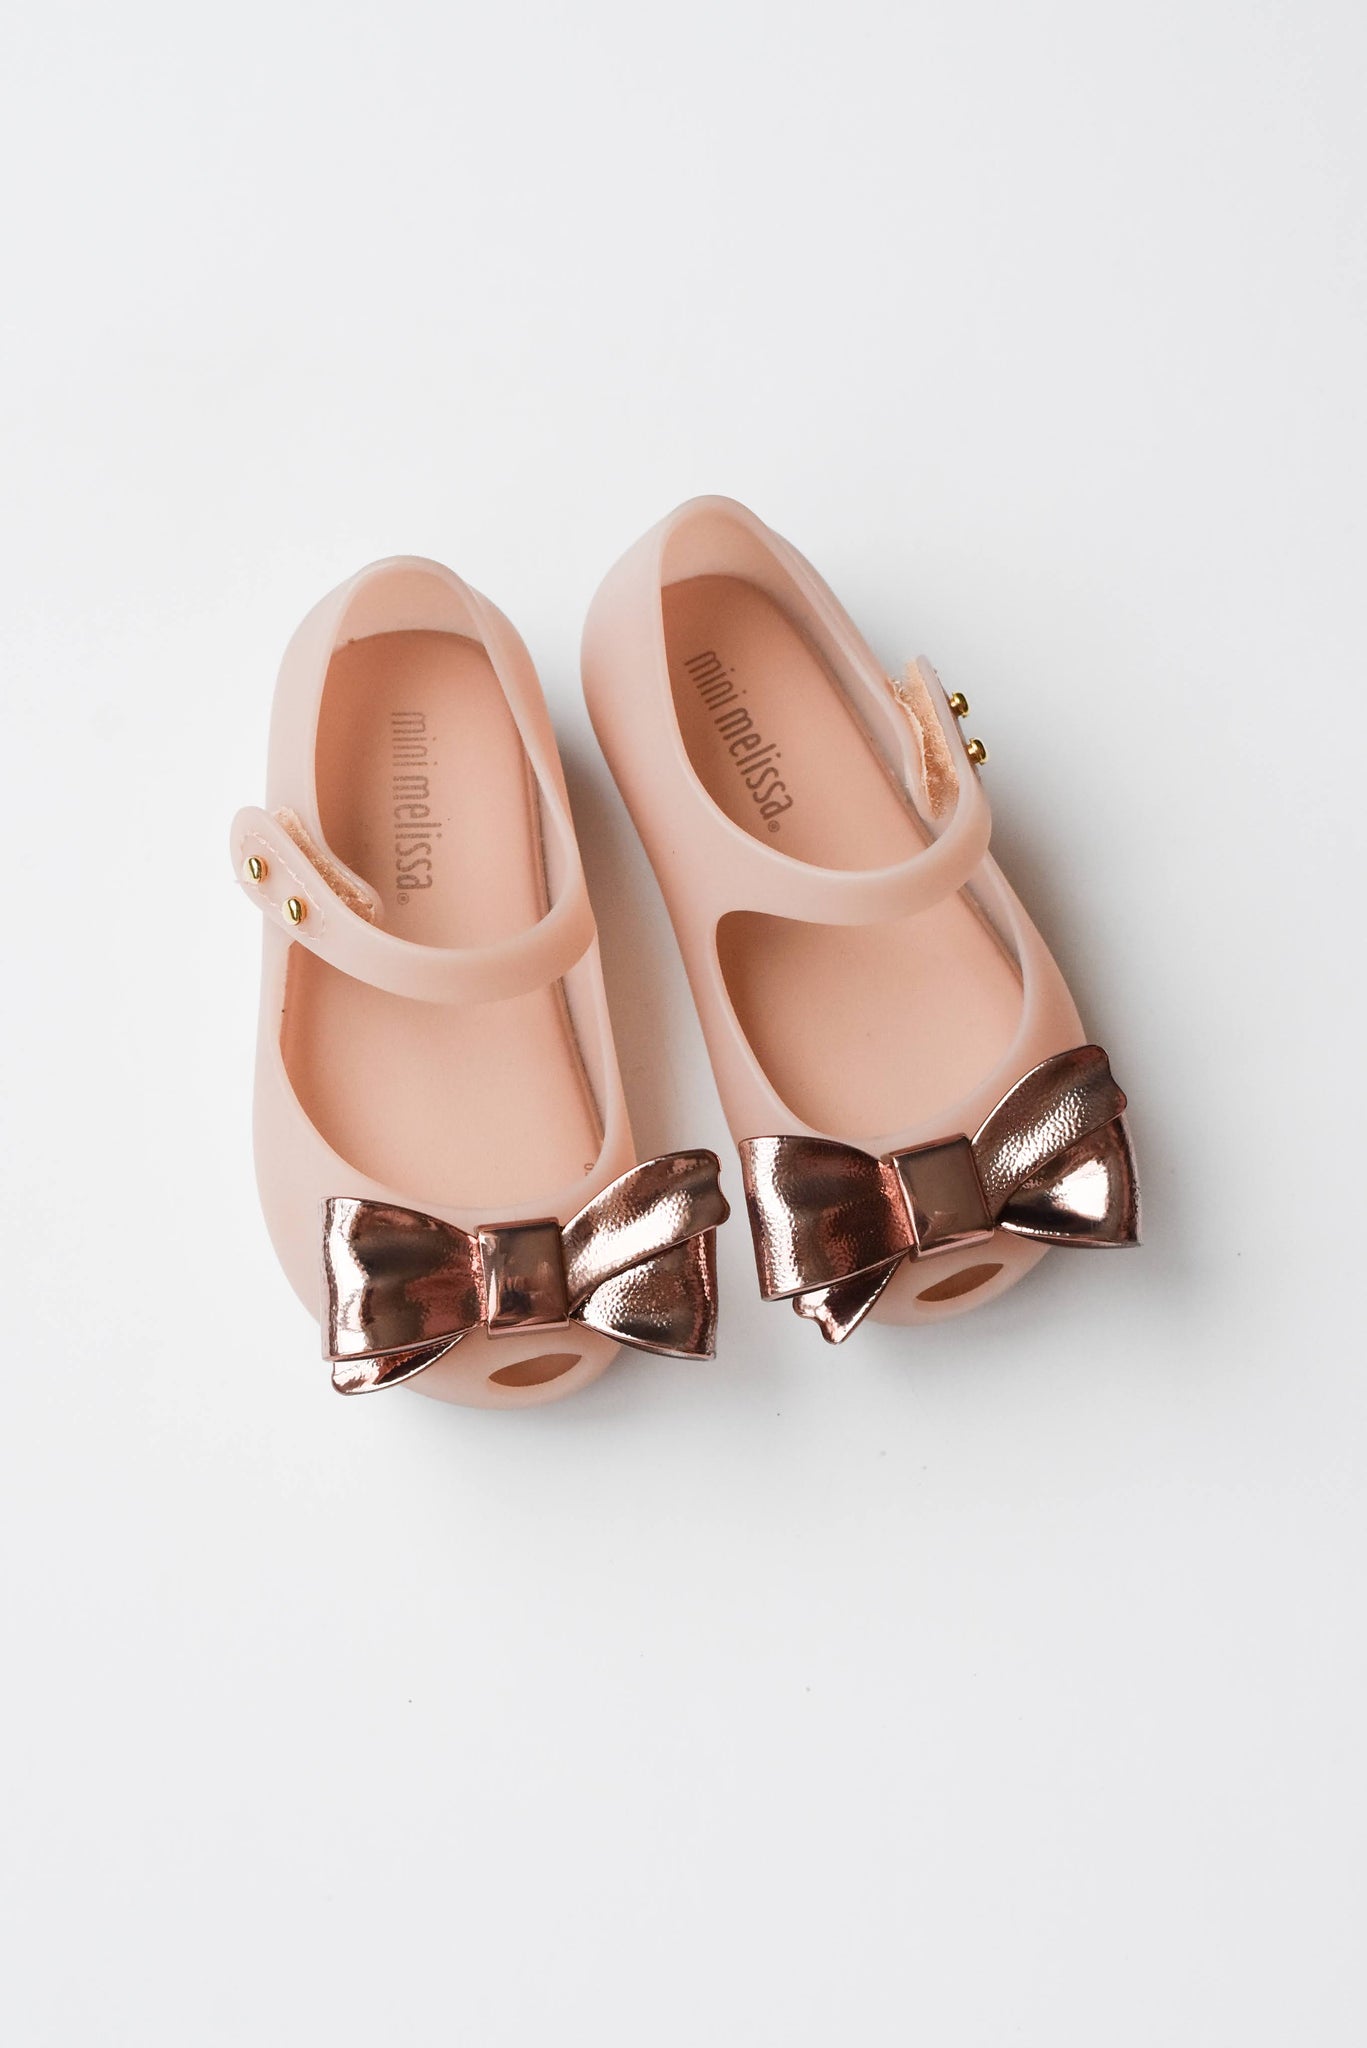 Mini Melissa Mary Janes Shoes • 6c